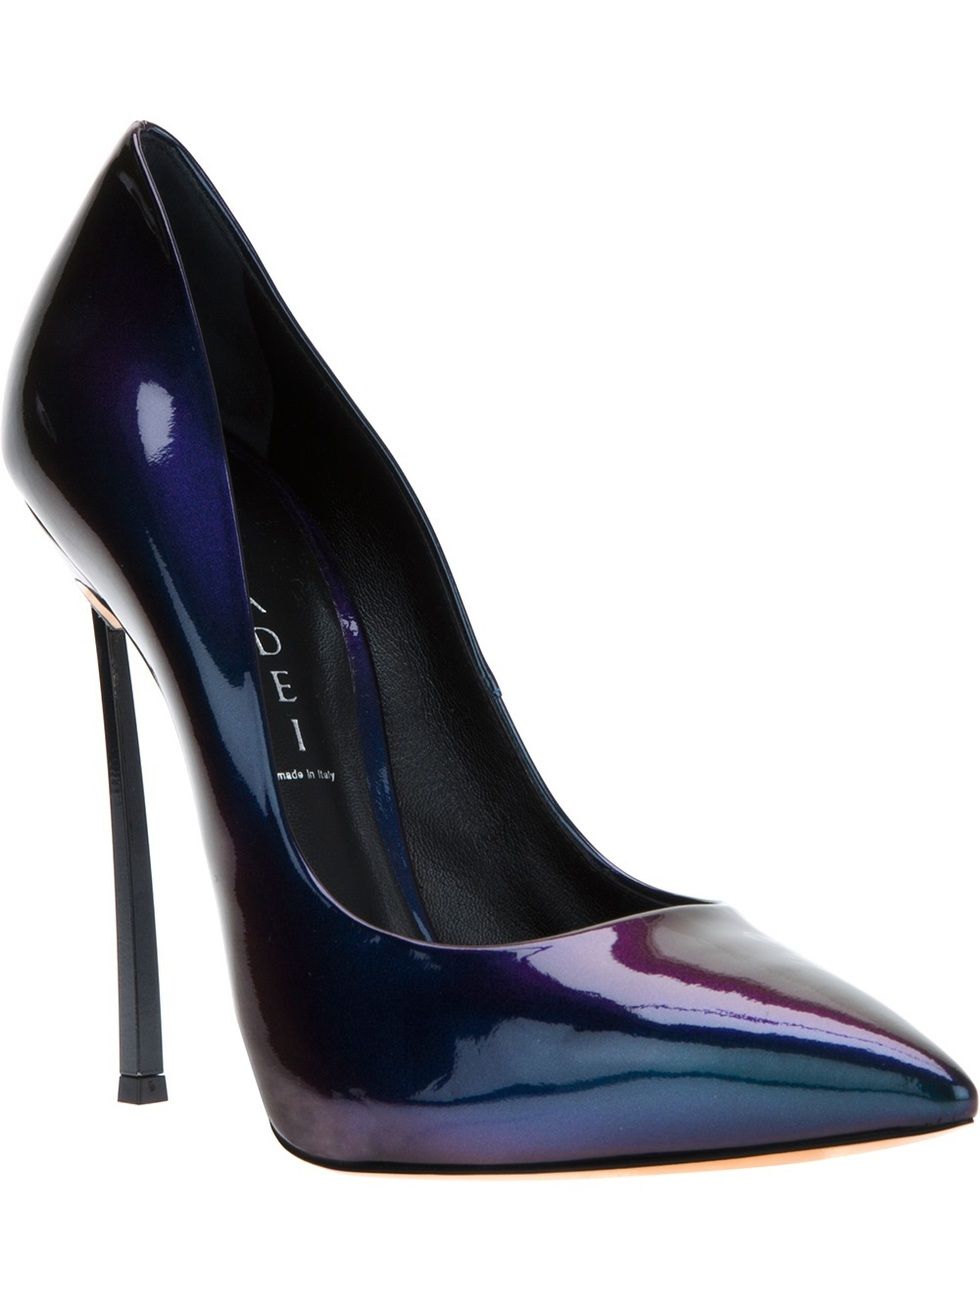 Footwear, Purple, High heels, Basic pump, Violet, Lavender, Beige, Material property, Court shoe, Leather, 